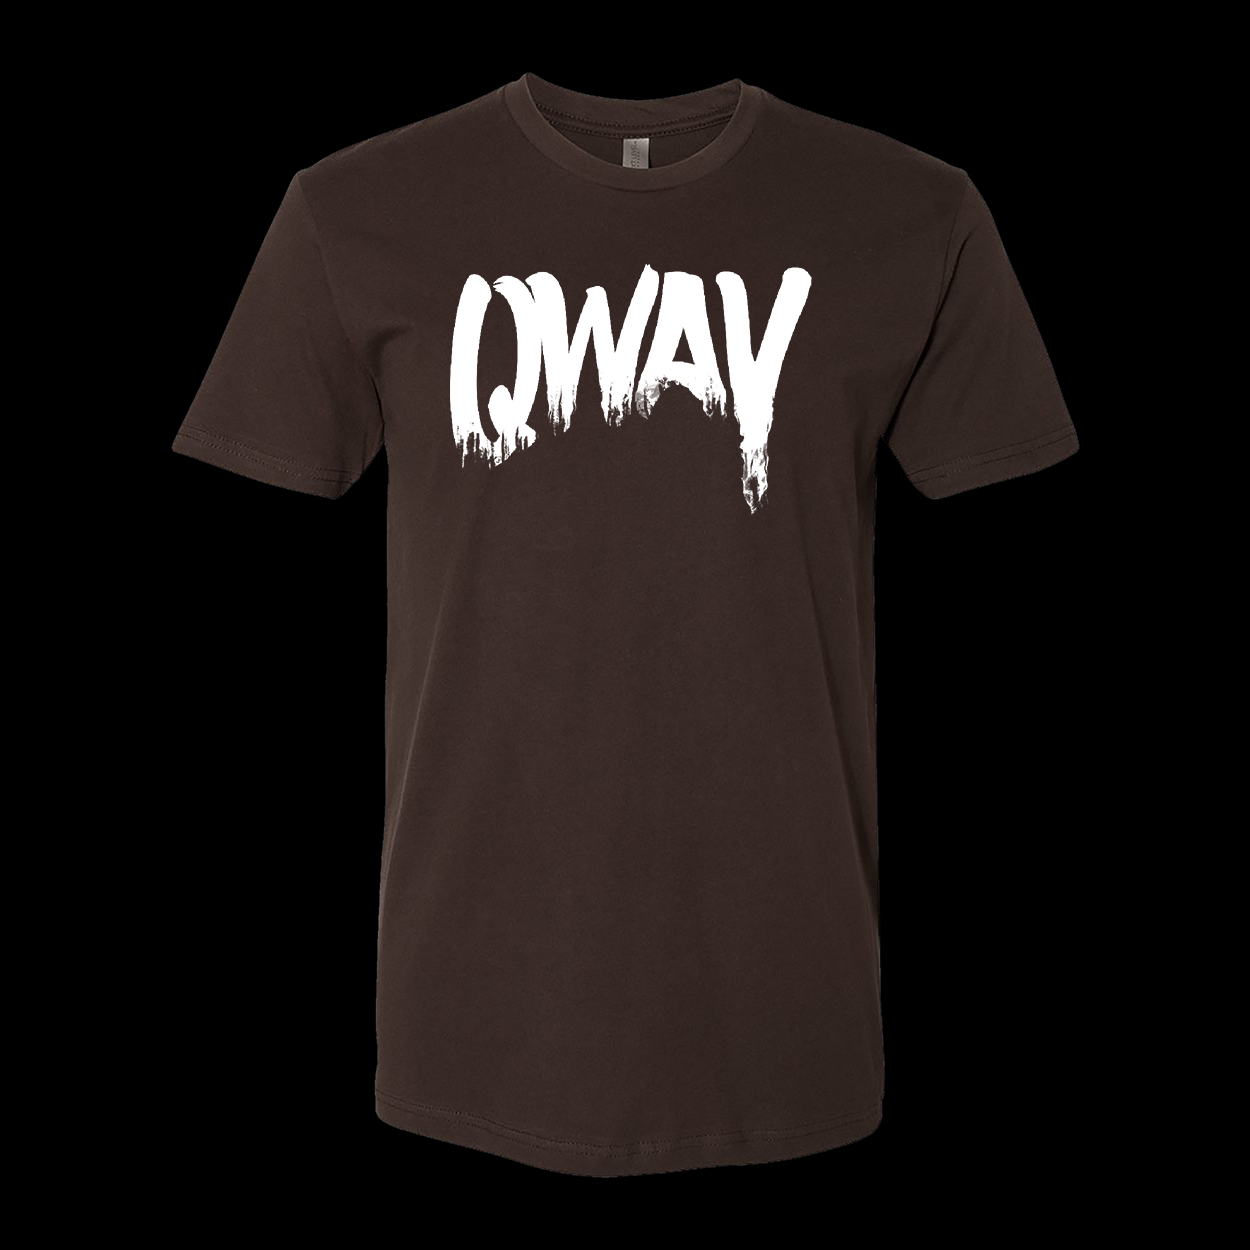 Qway Logo t-shirt Dark Chocolate color